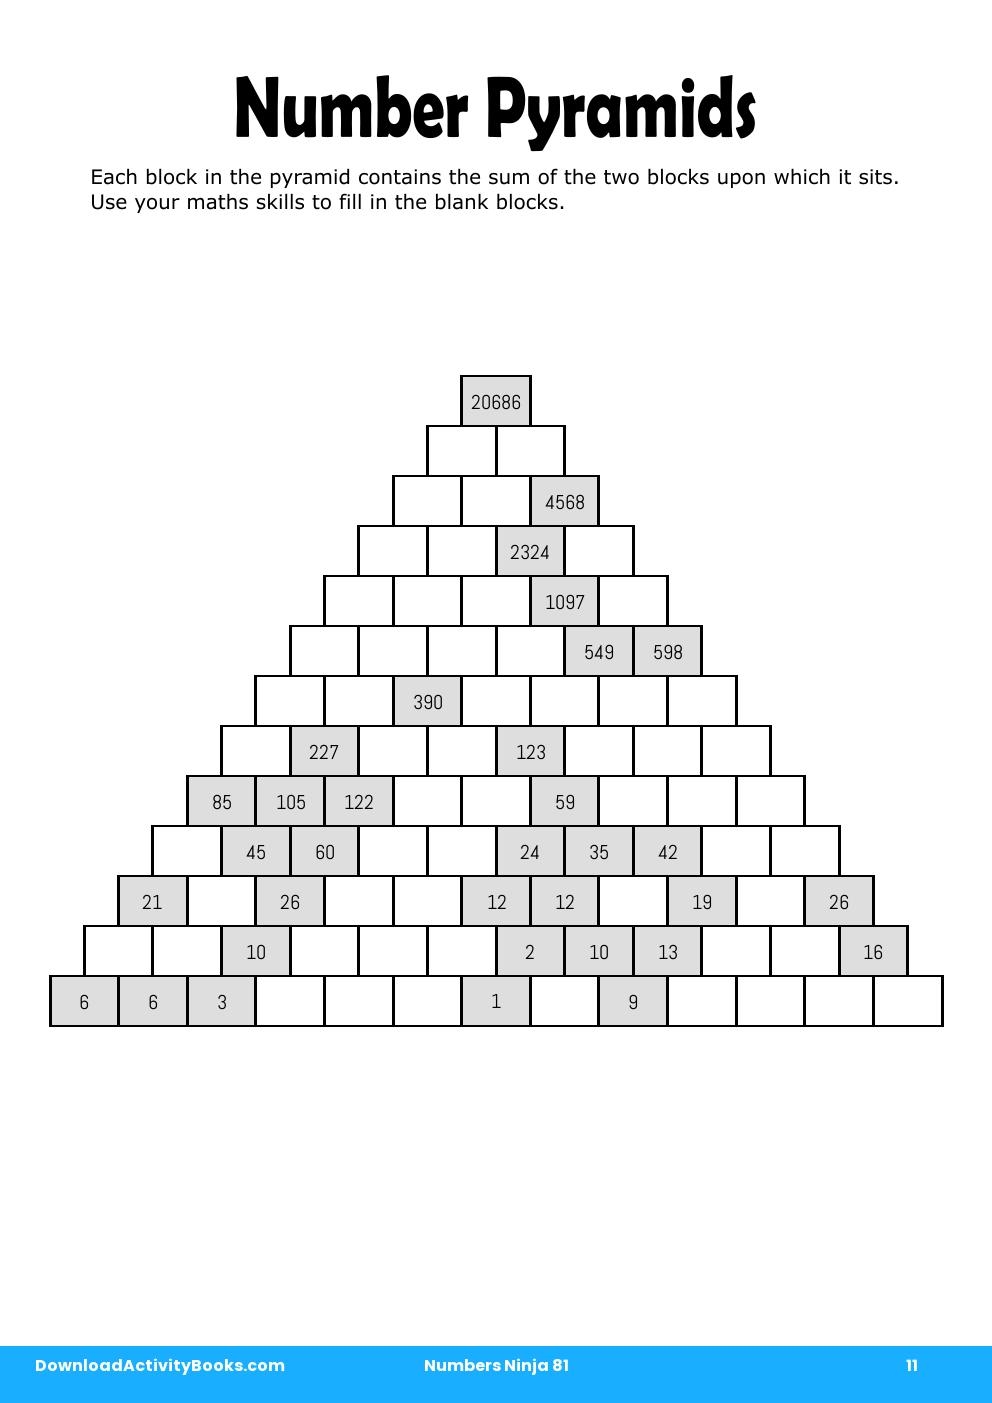 Number Pyramids in Numbers Ninja 81